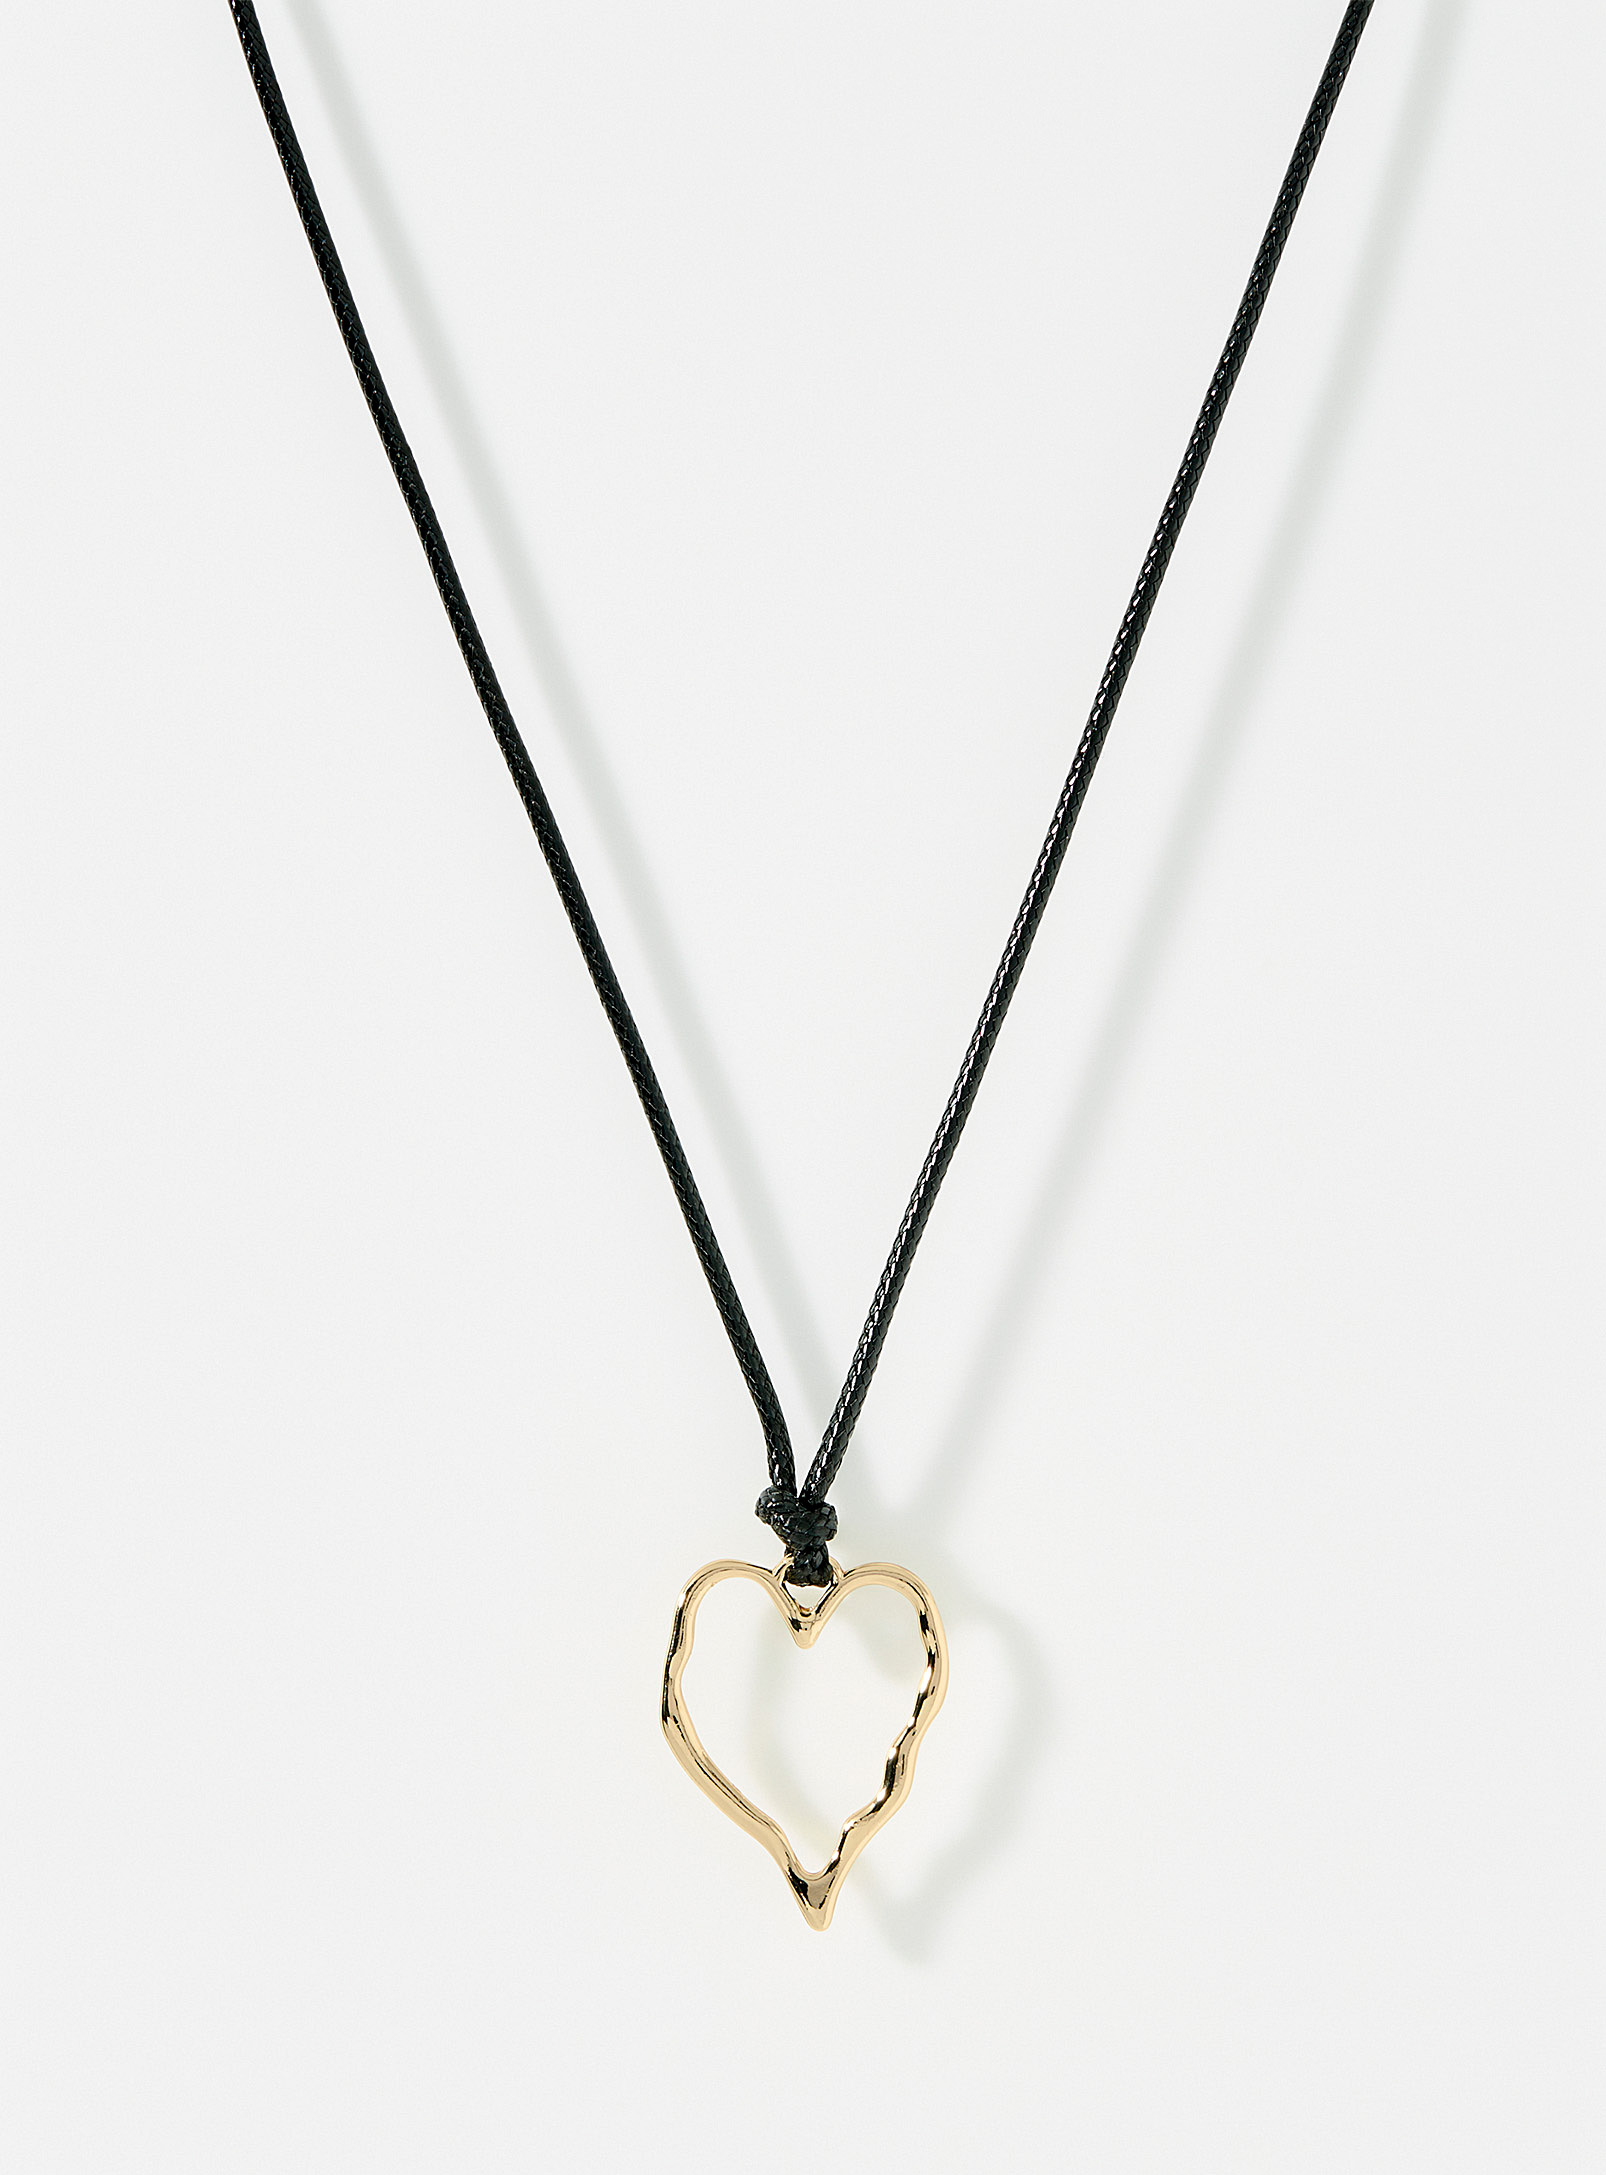 Simons - Women's Rebel heart cord necklace